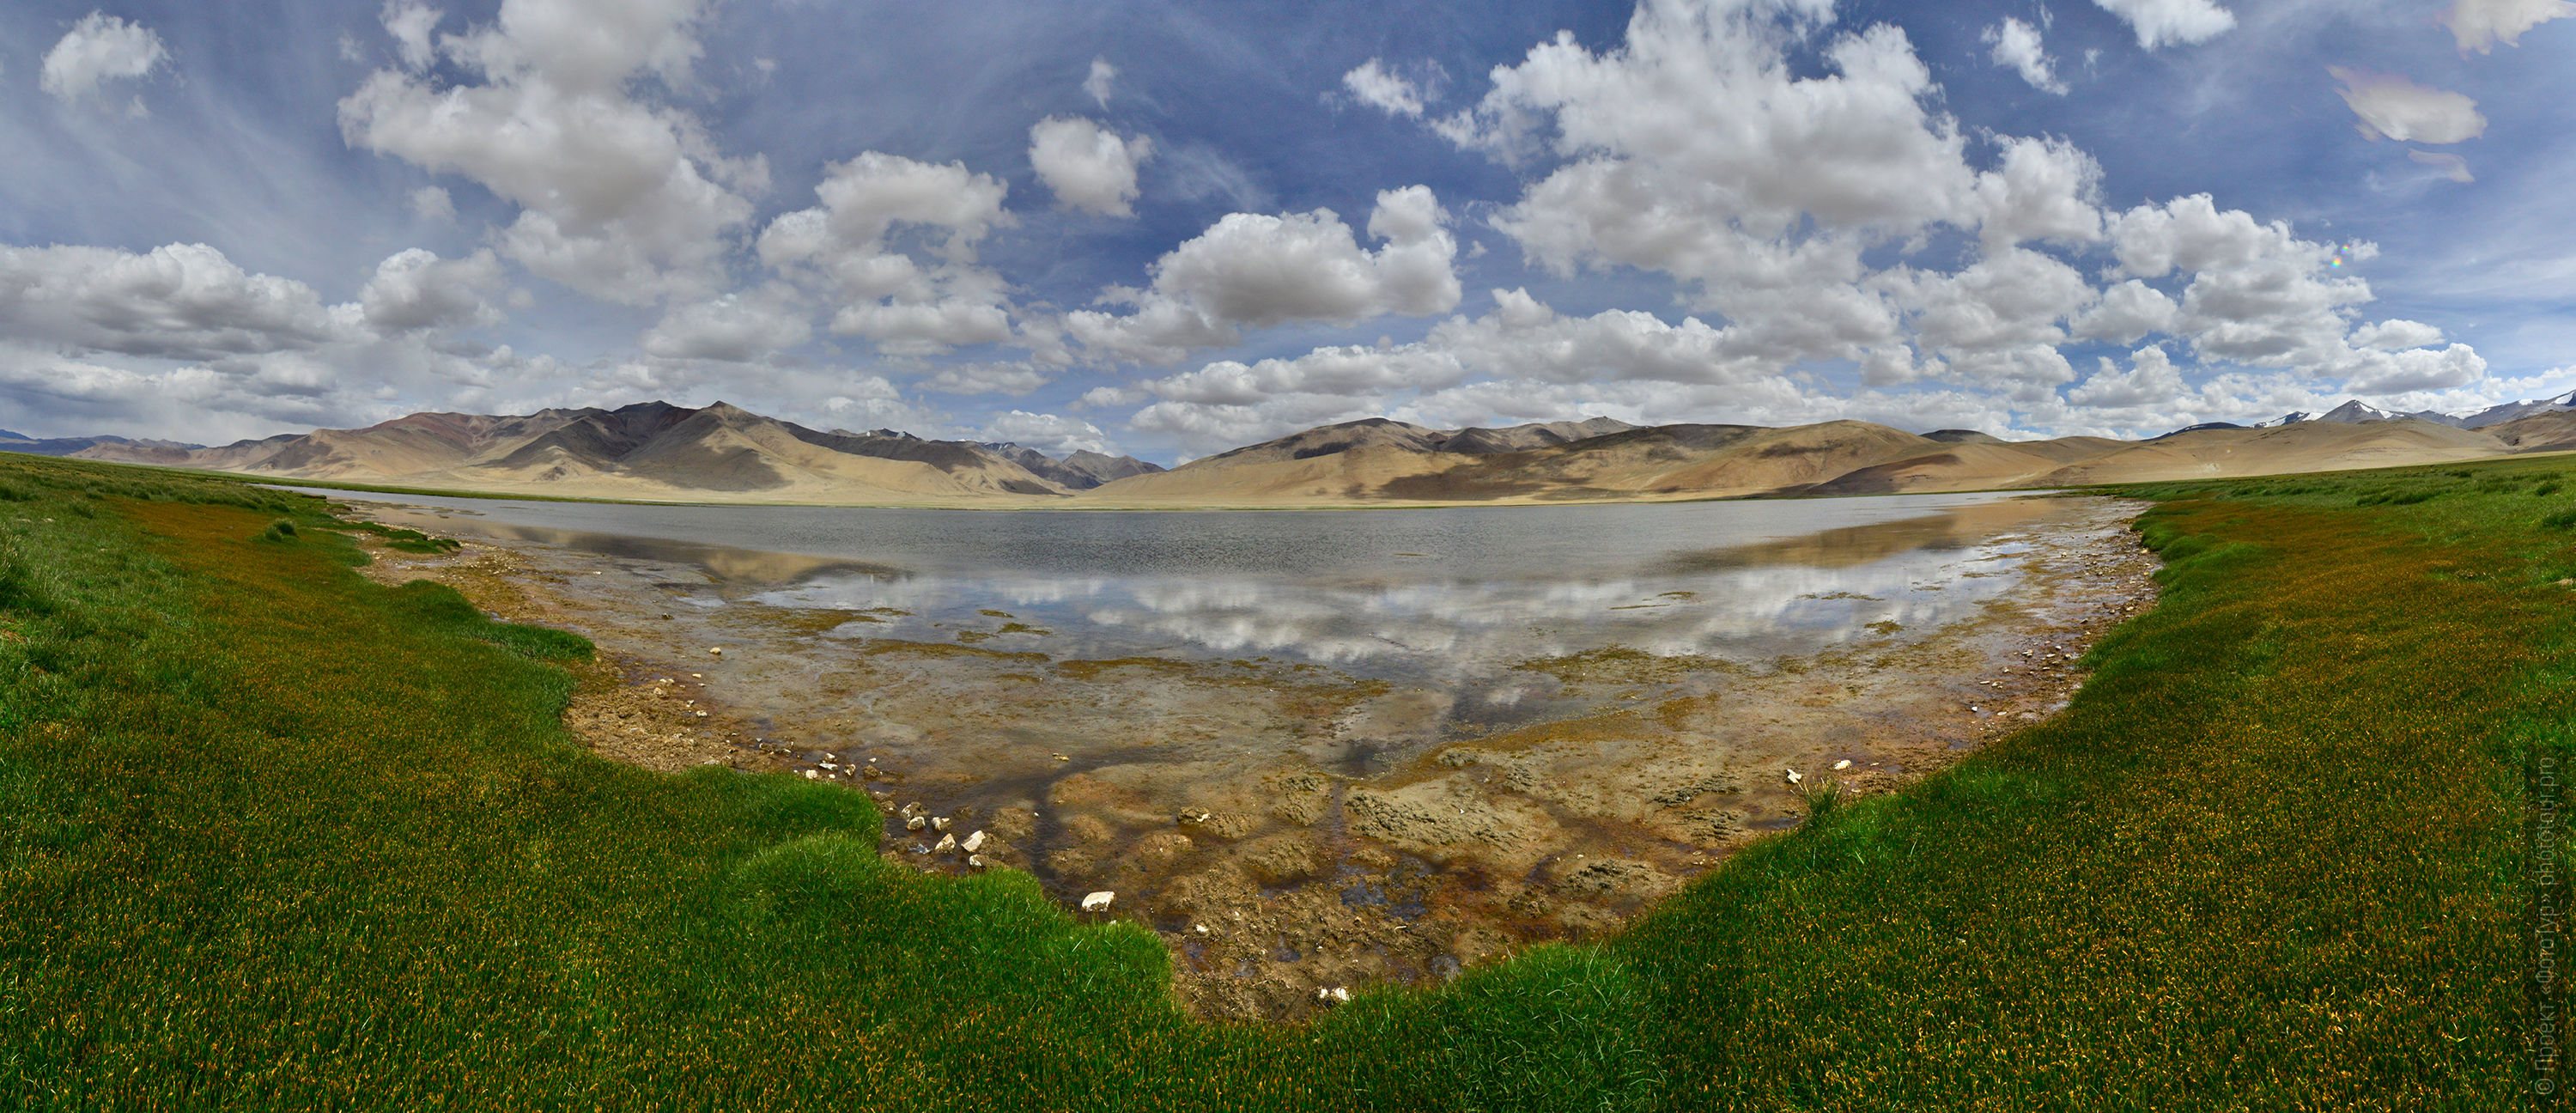 Lake Tso Startsapak, Ladakh. Expedition Tibet Lake-2: Pangong, Tso Moriri, Tso Kar, Tso Startsapak, Leh-Manali highway.